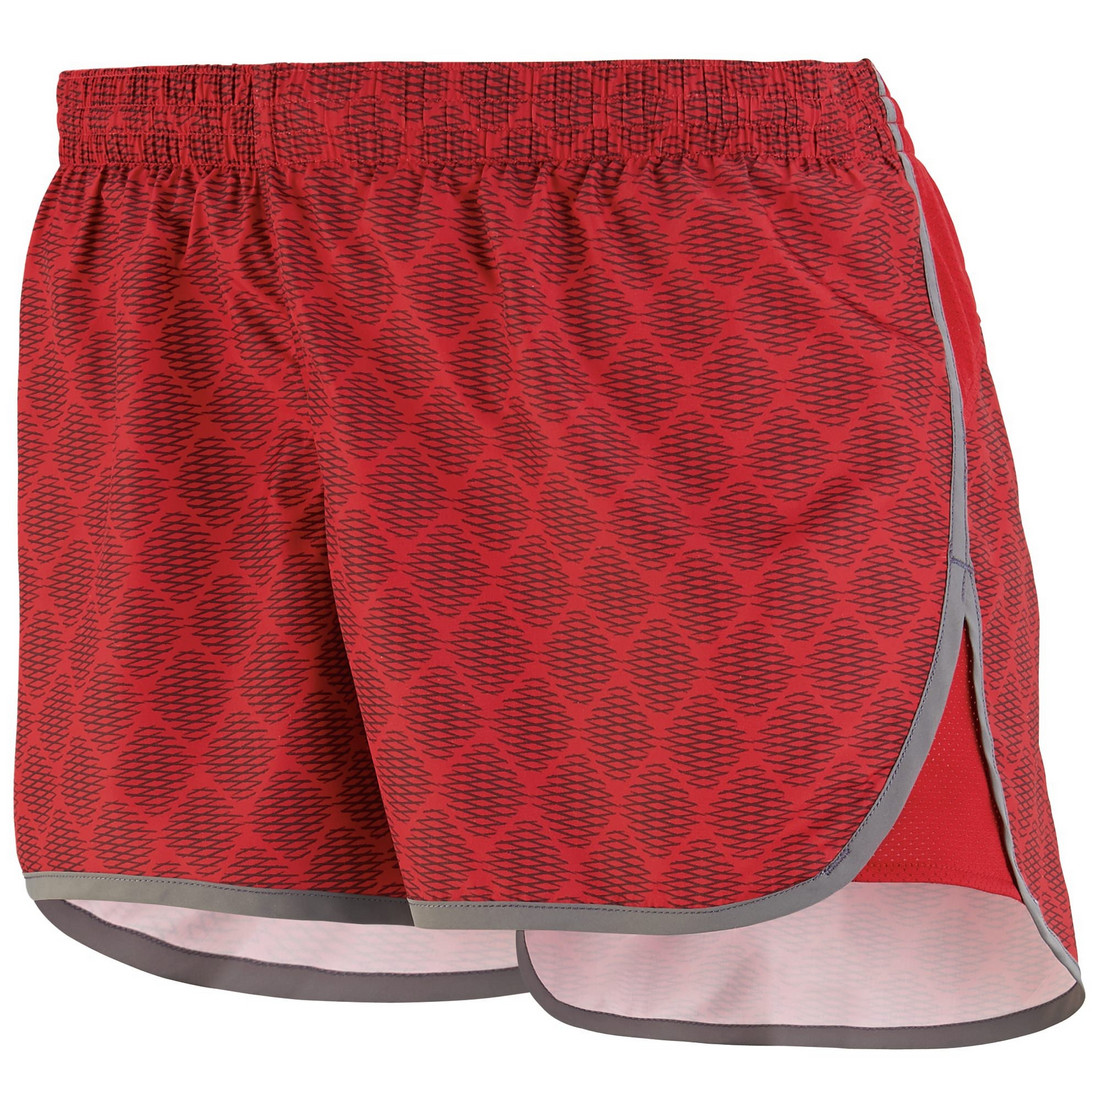 Picture of Augusta 2428A-Red Plexus- Graphite-S Ladies Fysique Short&#44; Red Plexus & Graphite - Small